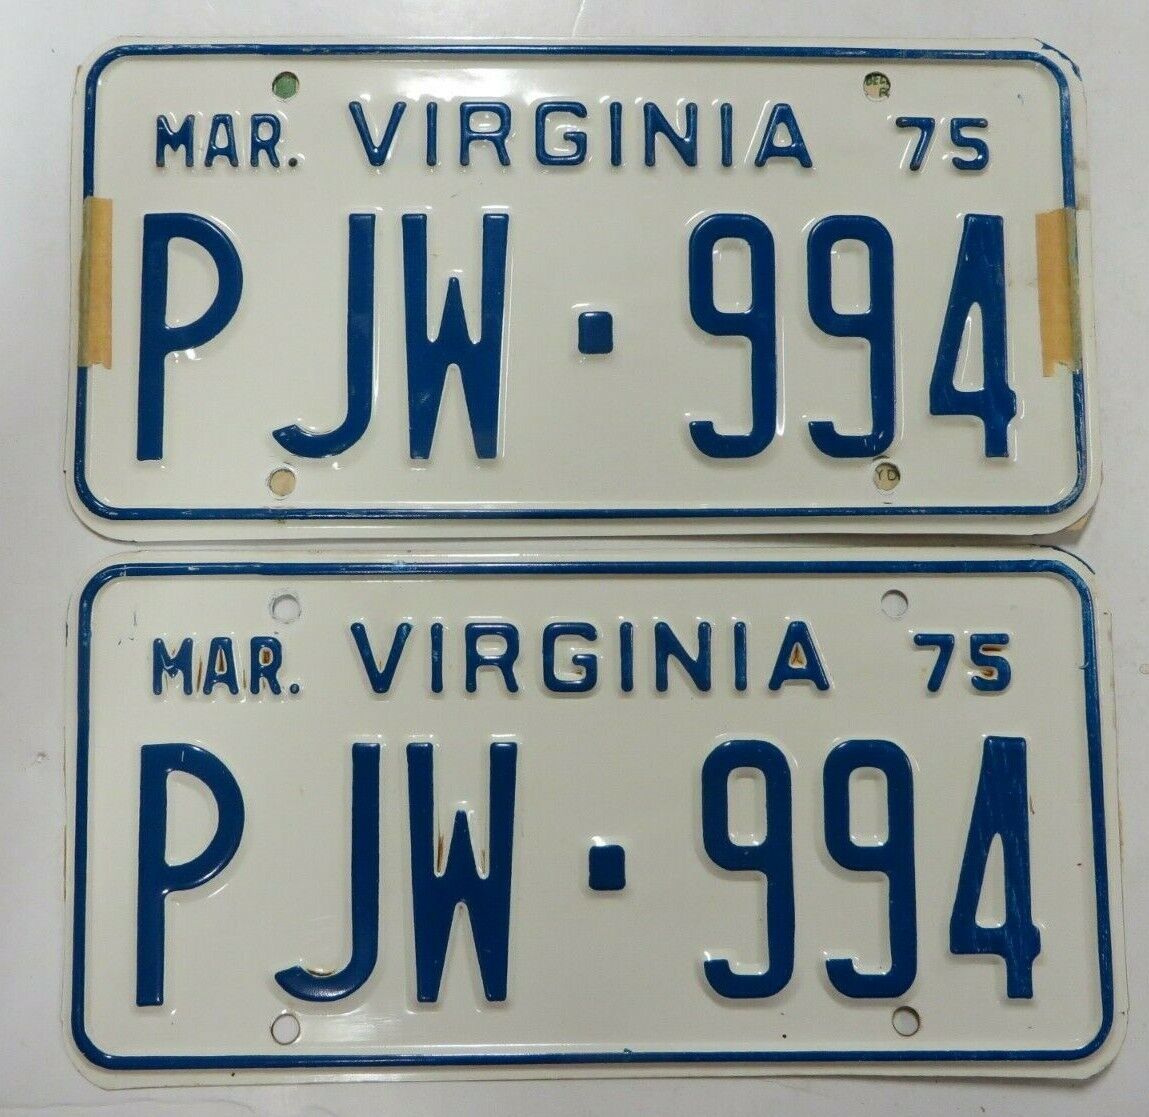 Vintage 1975 VIRGINIA License Plate Tag #PJW-994 Antique UNUSED New NOS Pair Set